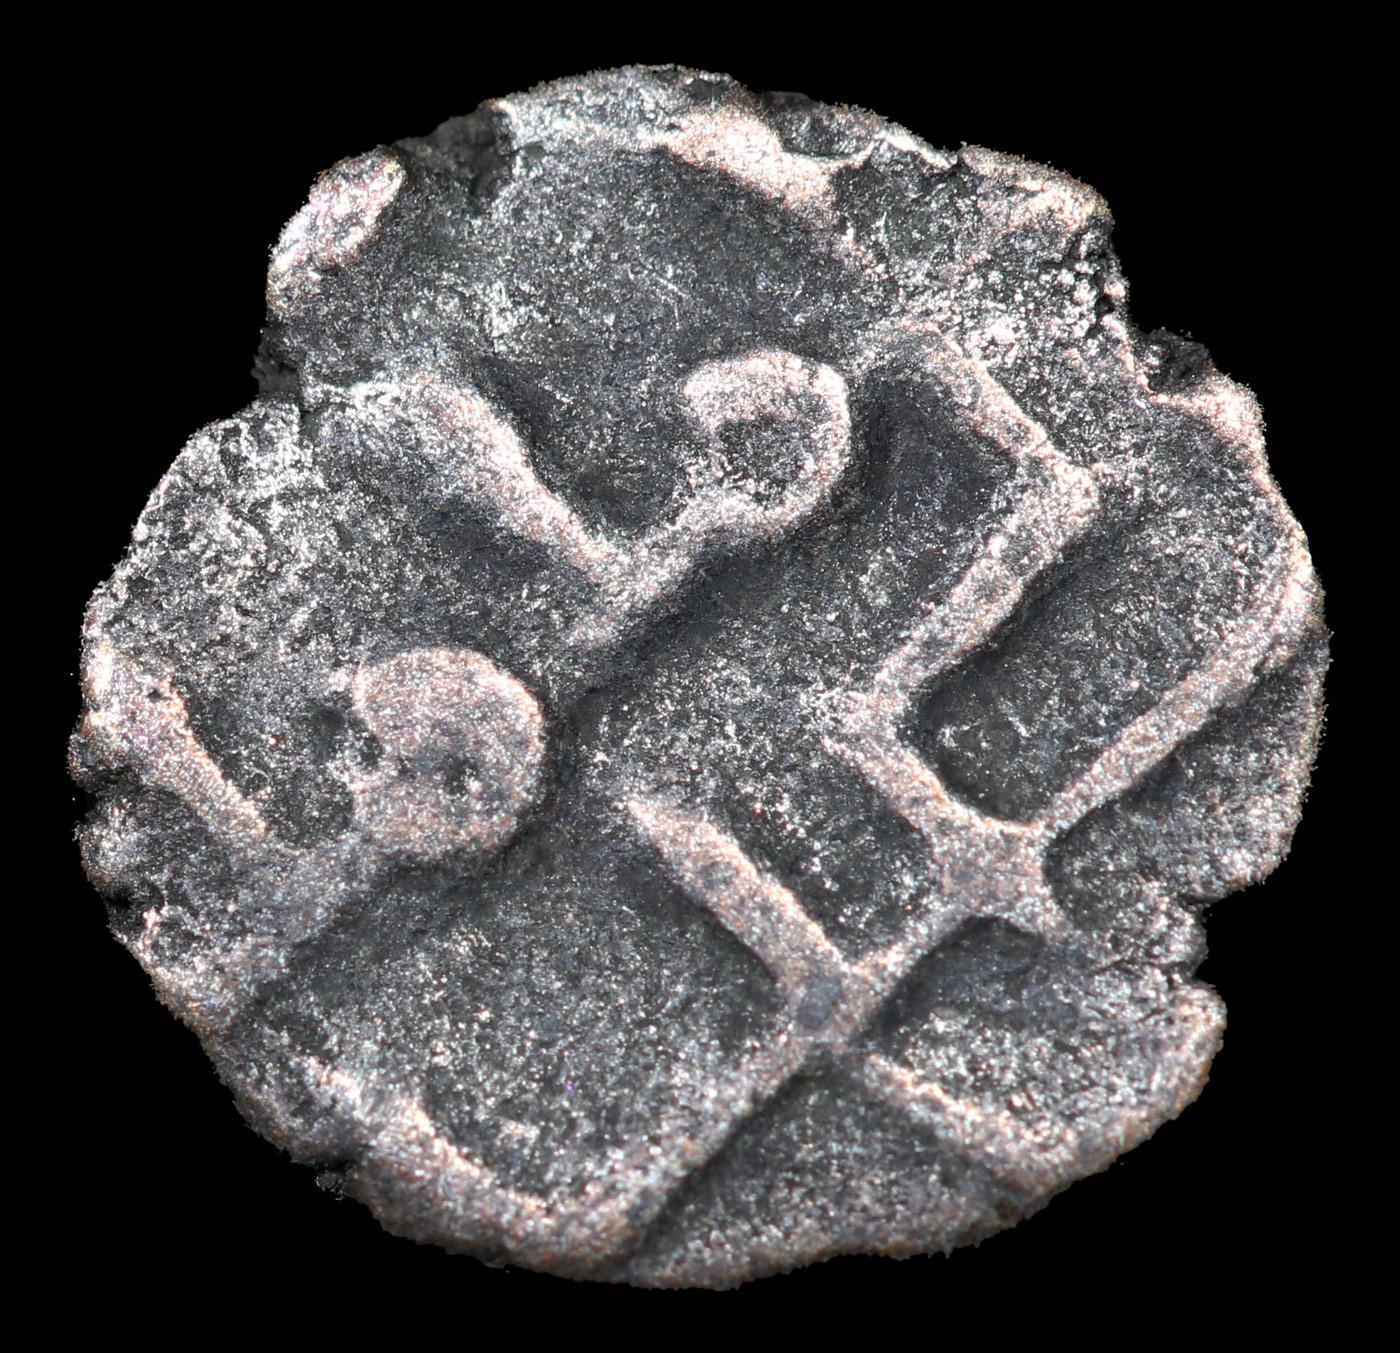 854-1011 AD Habbari Emirate Abbasid Caliphate Silver Damma Ancient Grades AU